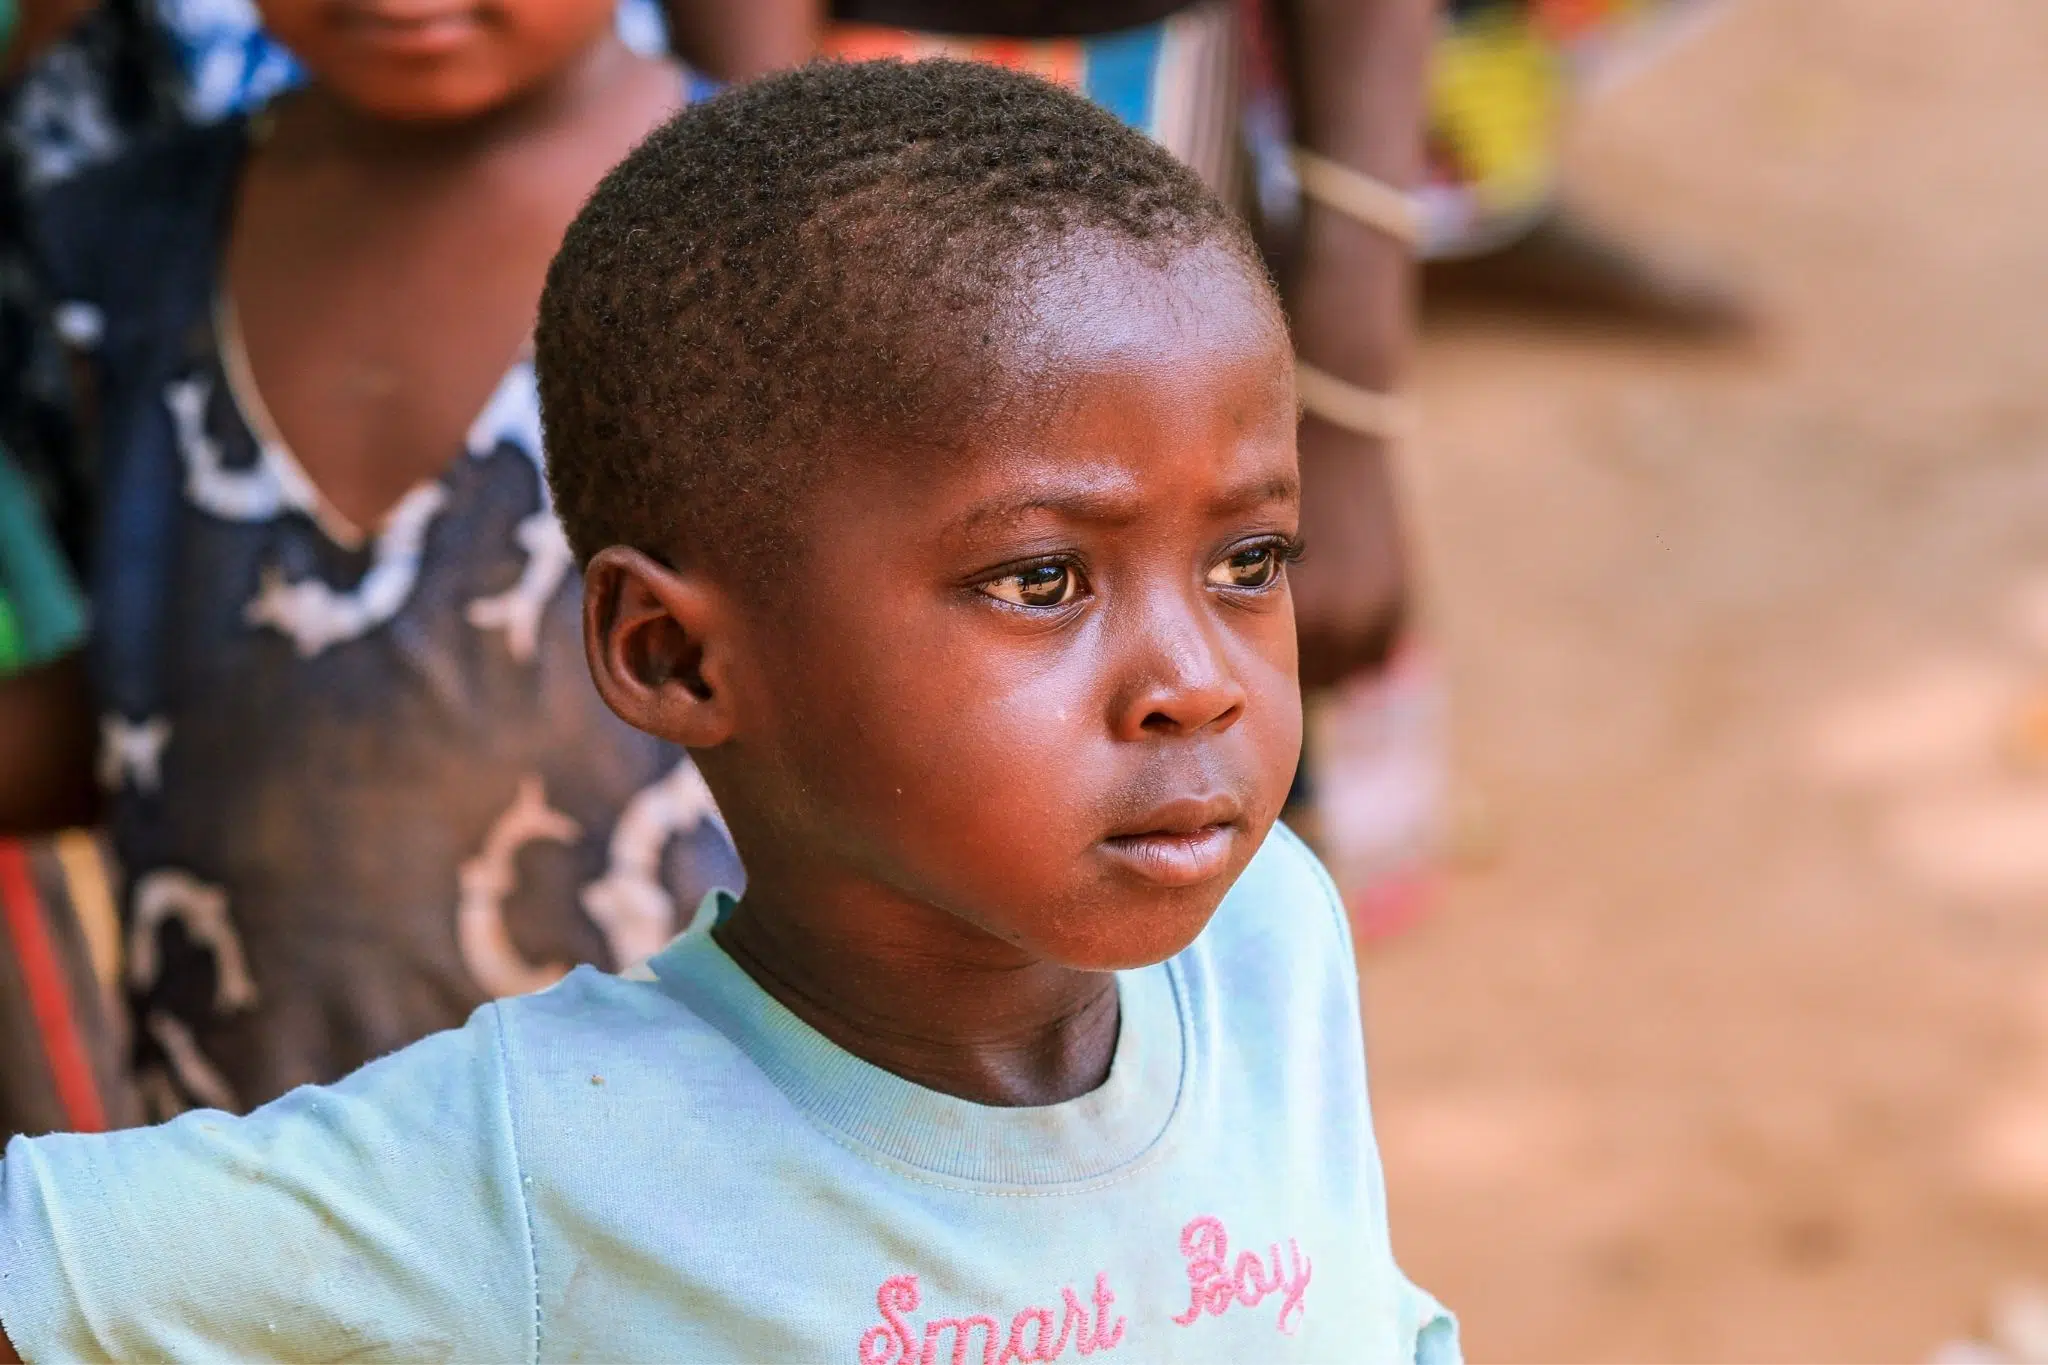 A young boy in Burkina Faso